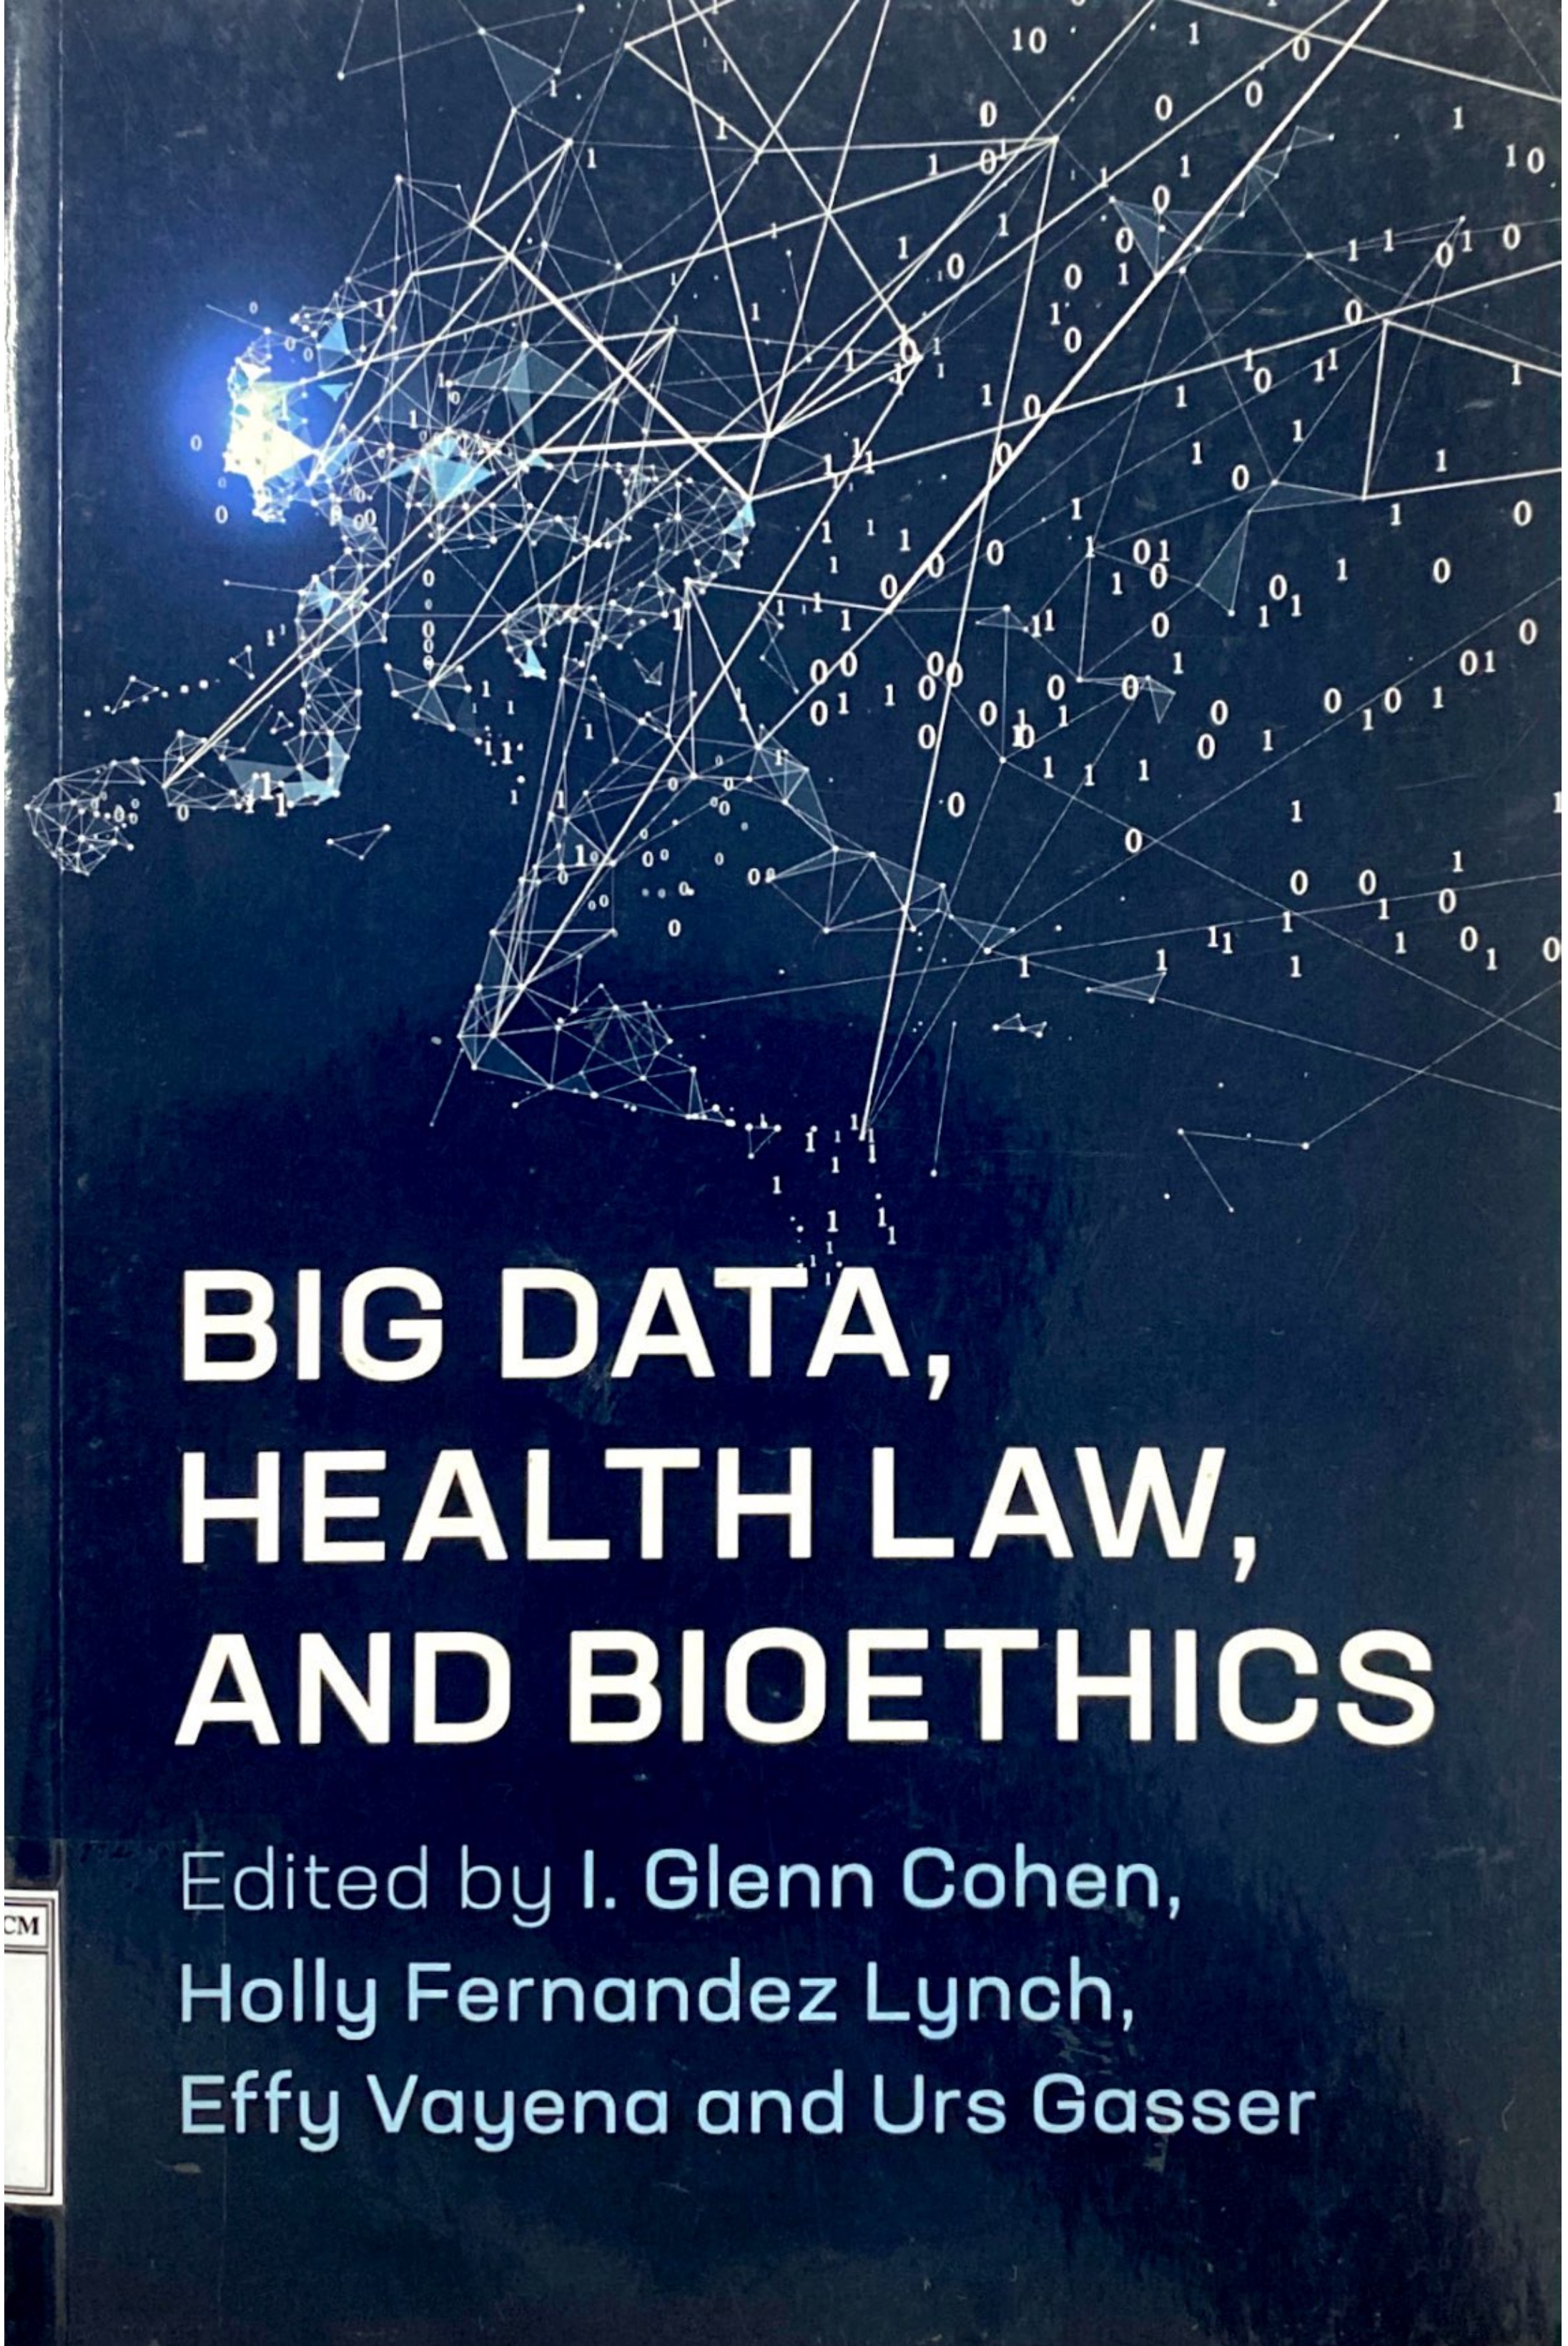 Big data, health law, and bioethics